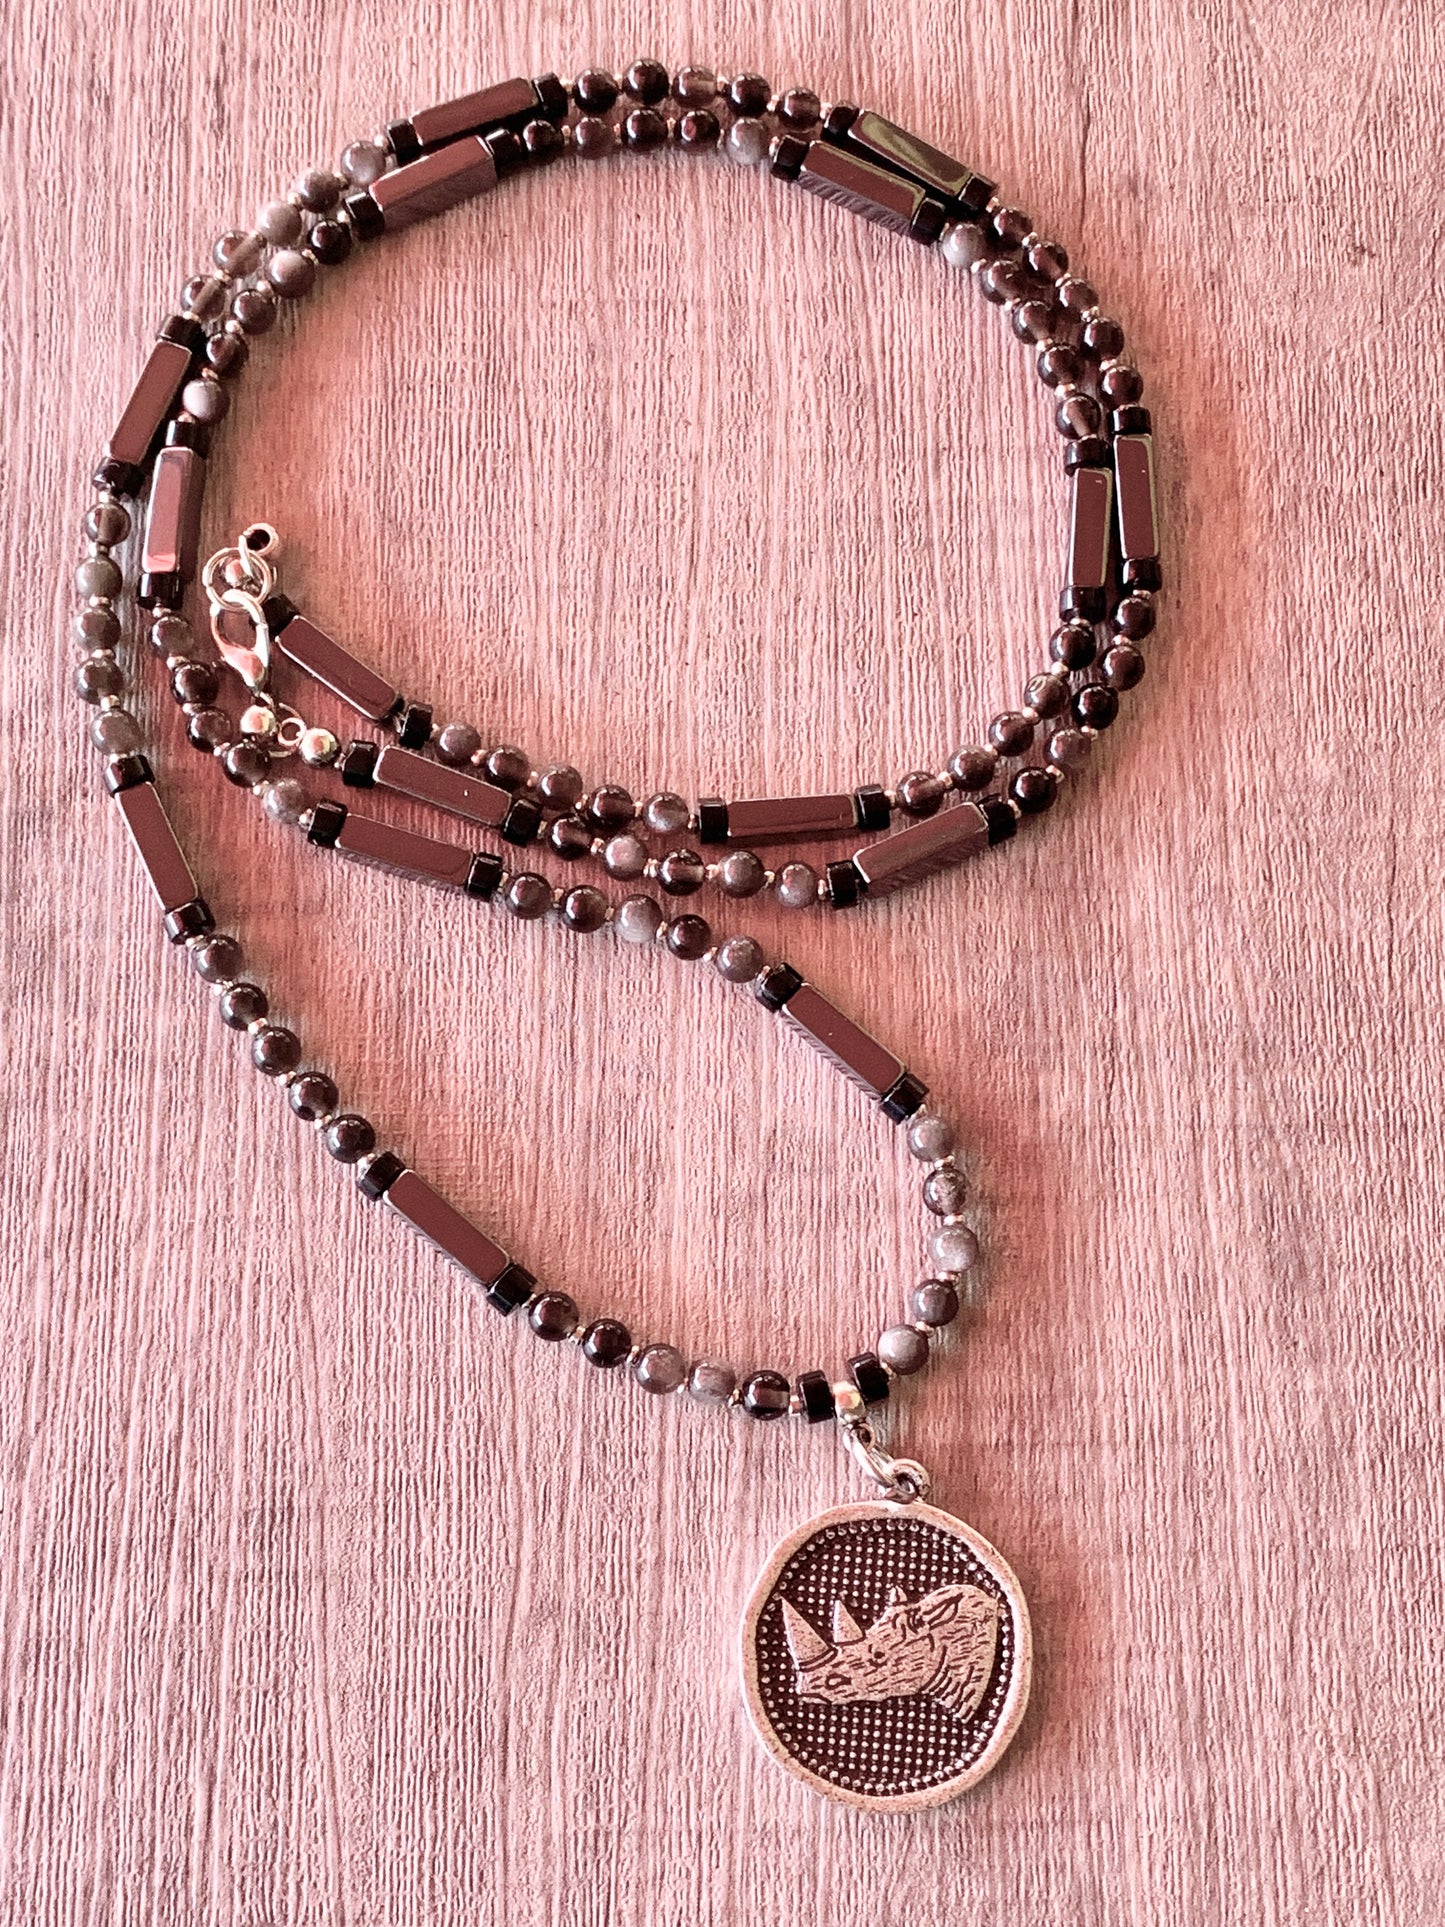 Sudan Handmade Silver Obsidian, Hematite, and Black Quartz 29" Necklace with Rhino Coin Pendant